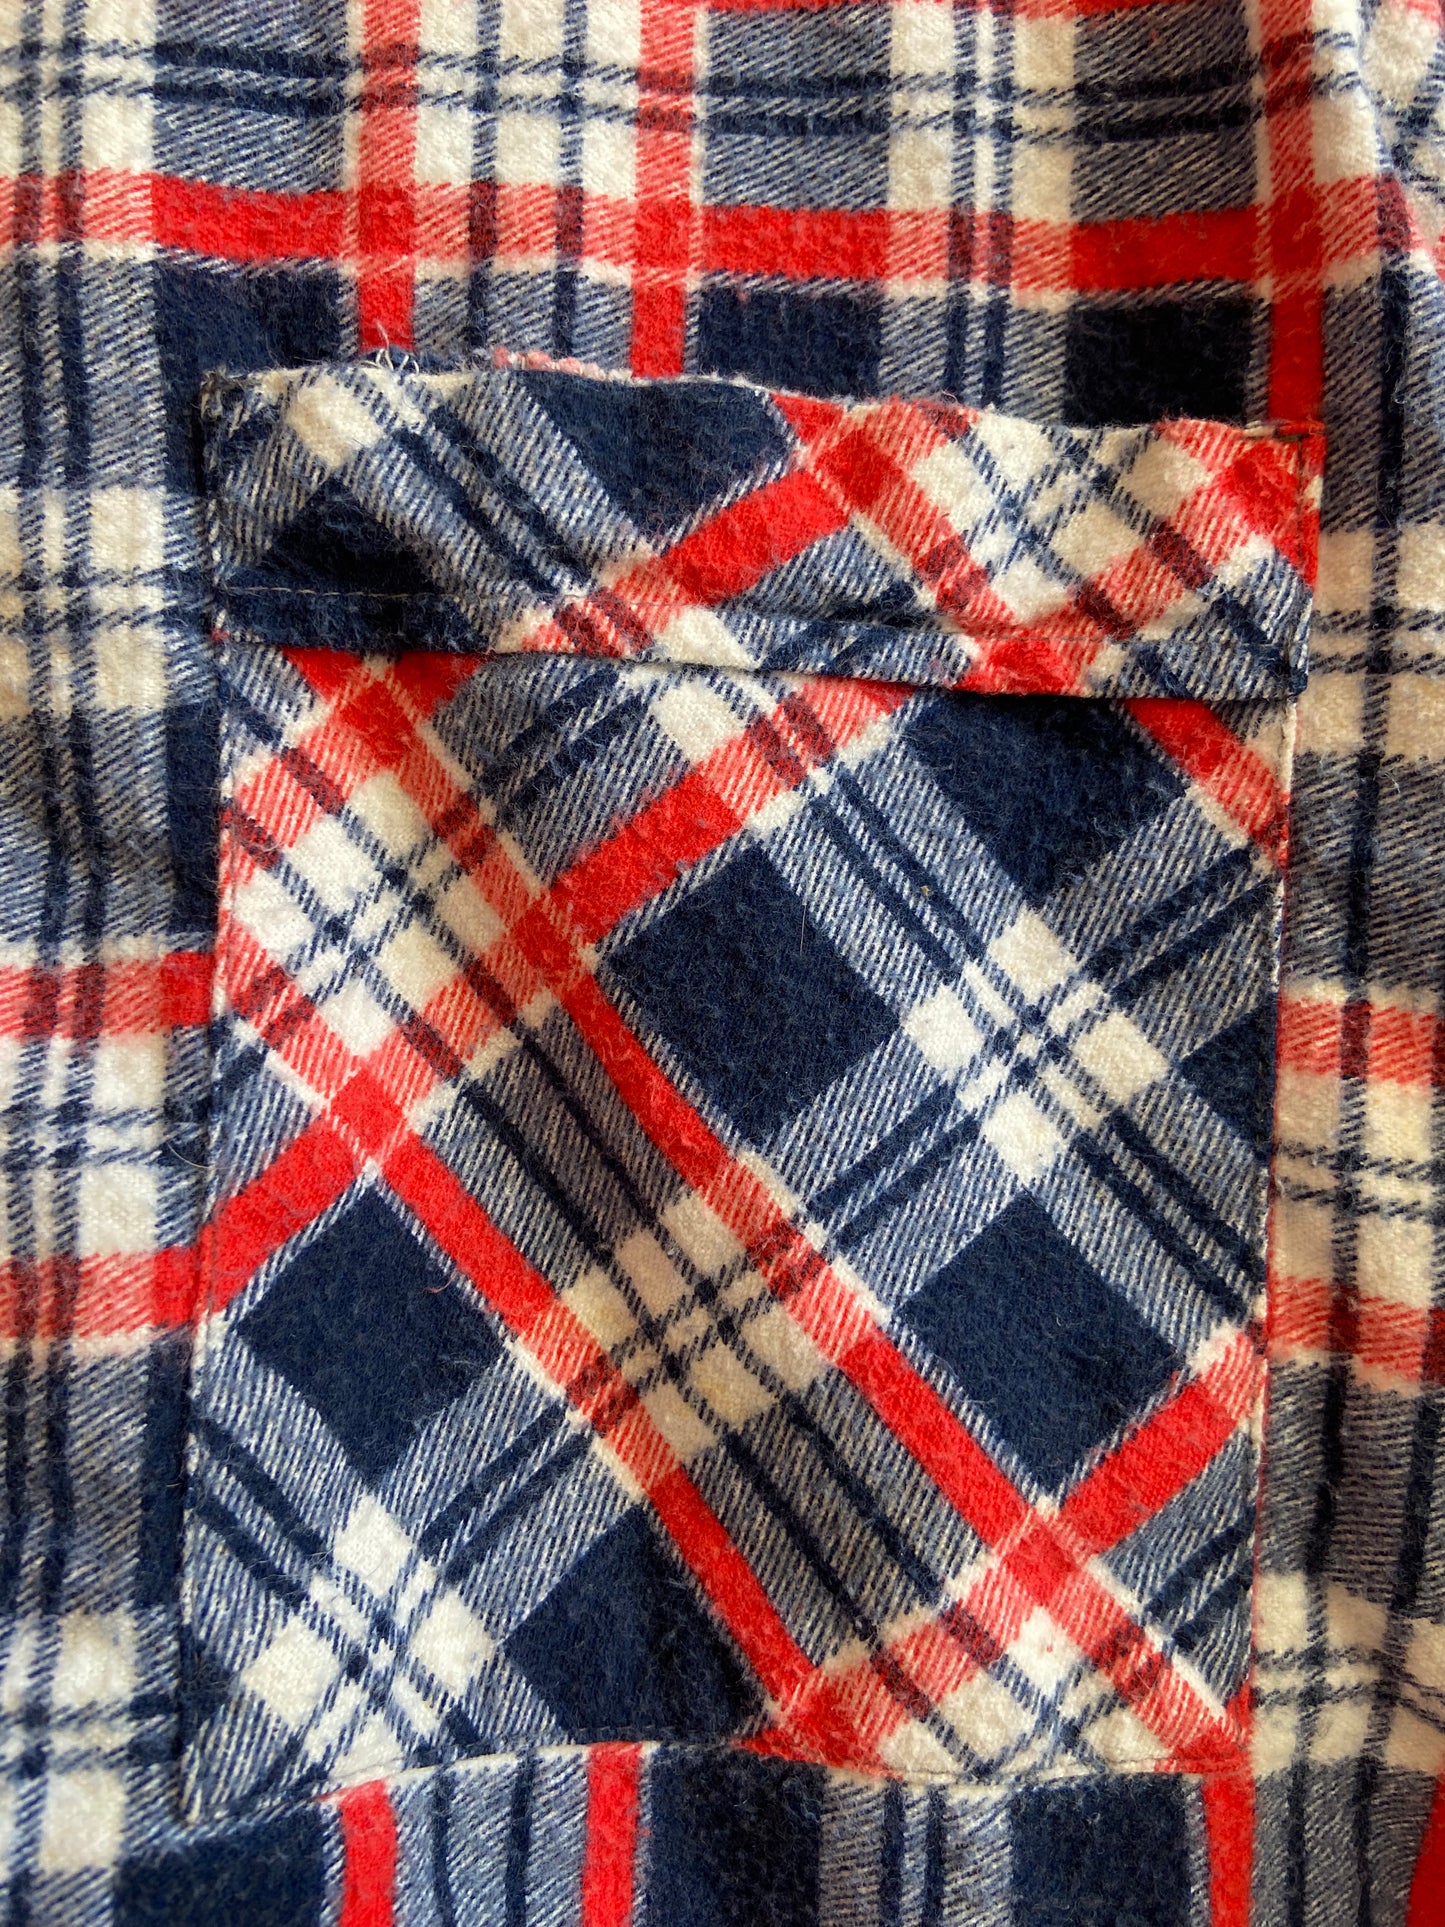 Plaid Flannel Button Up Shirt